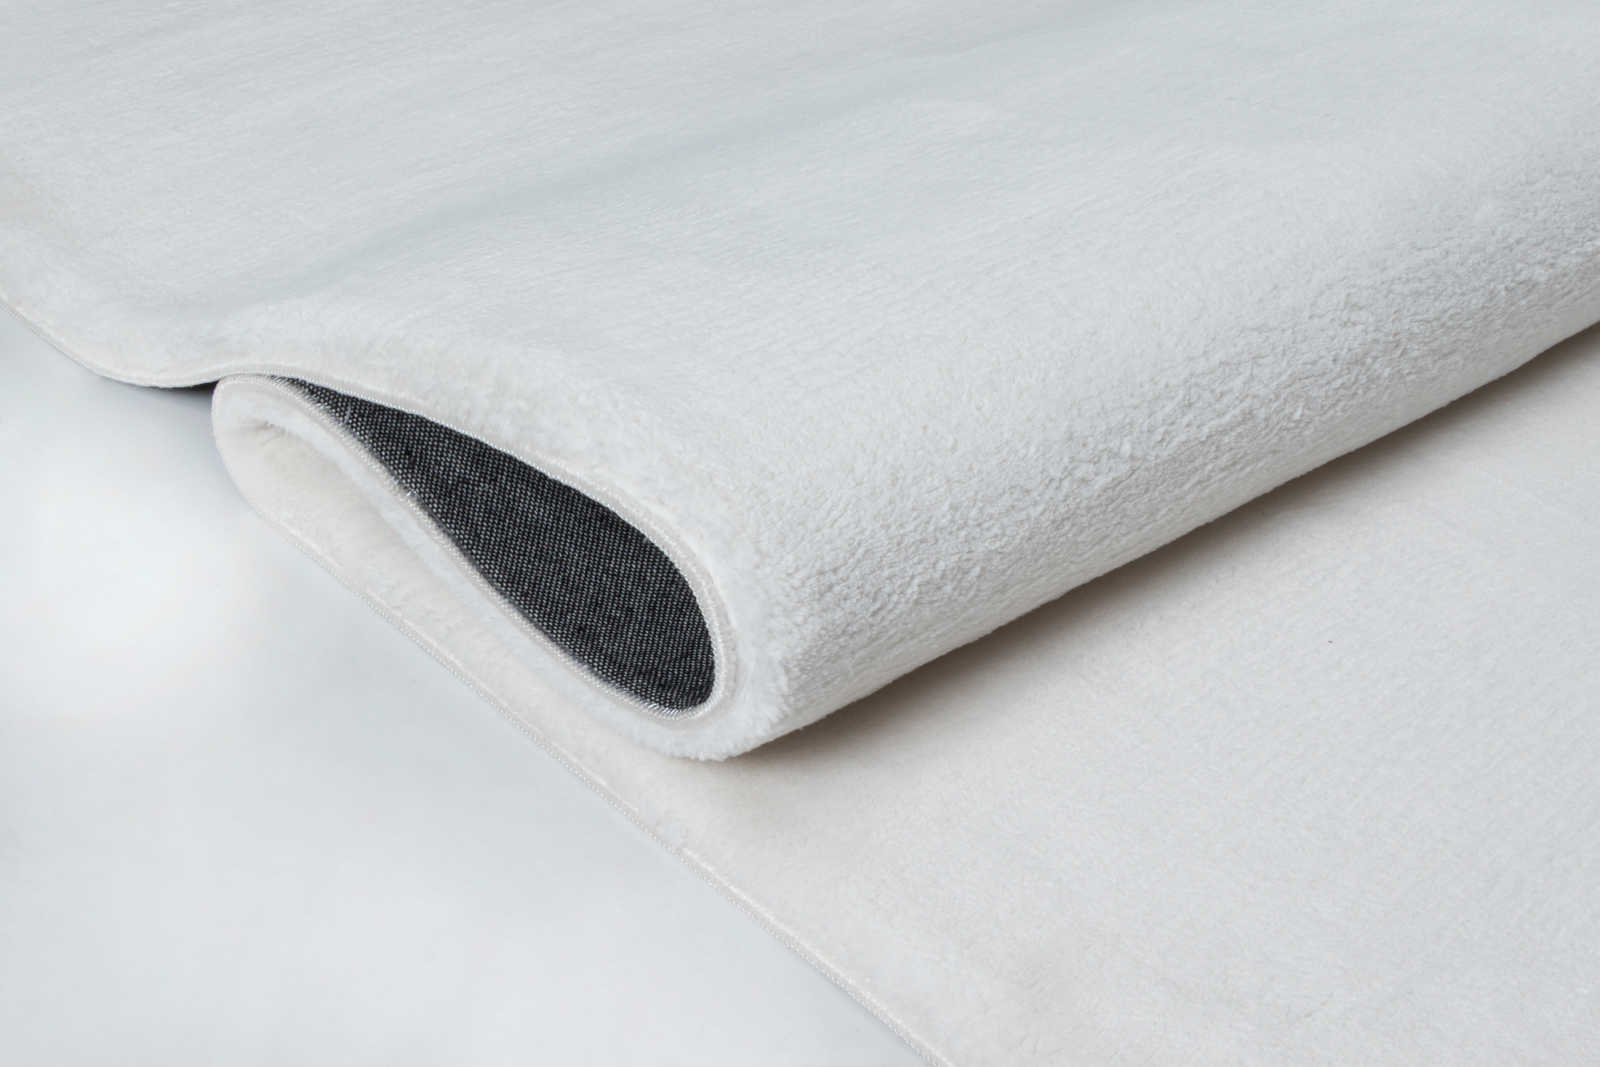             Fluffy high pile carpet in pleasant cream - 150 x 80 cm
        